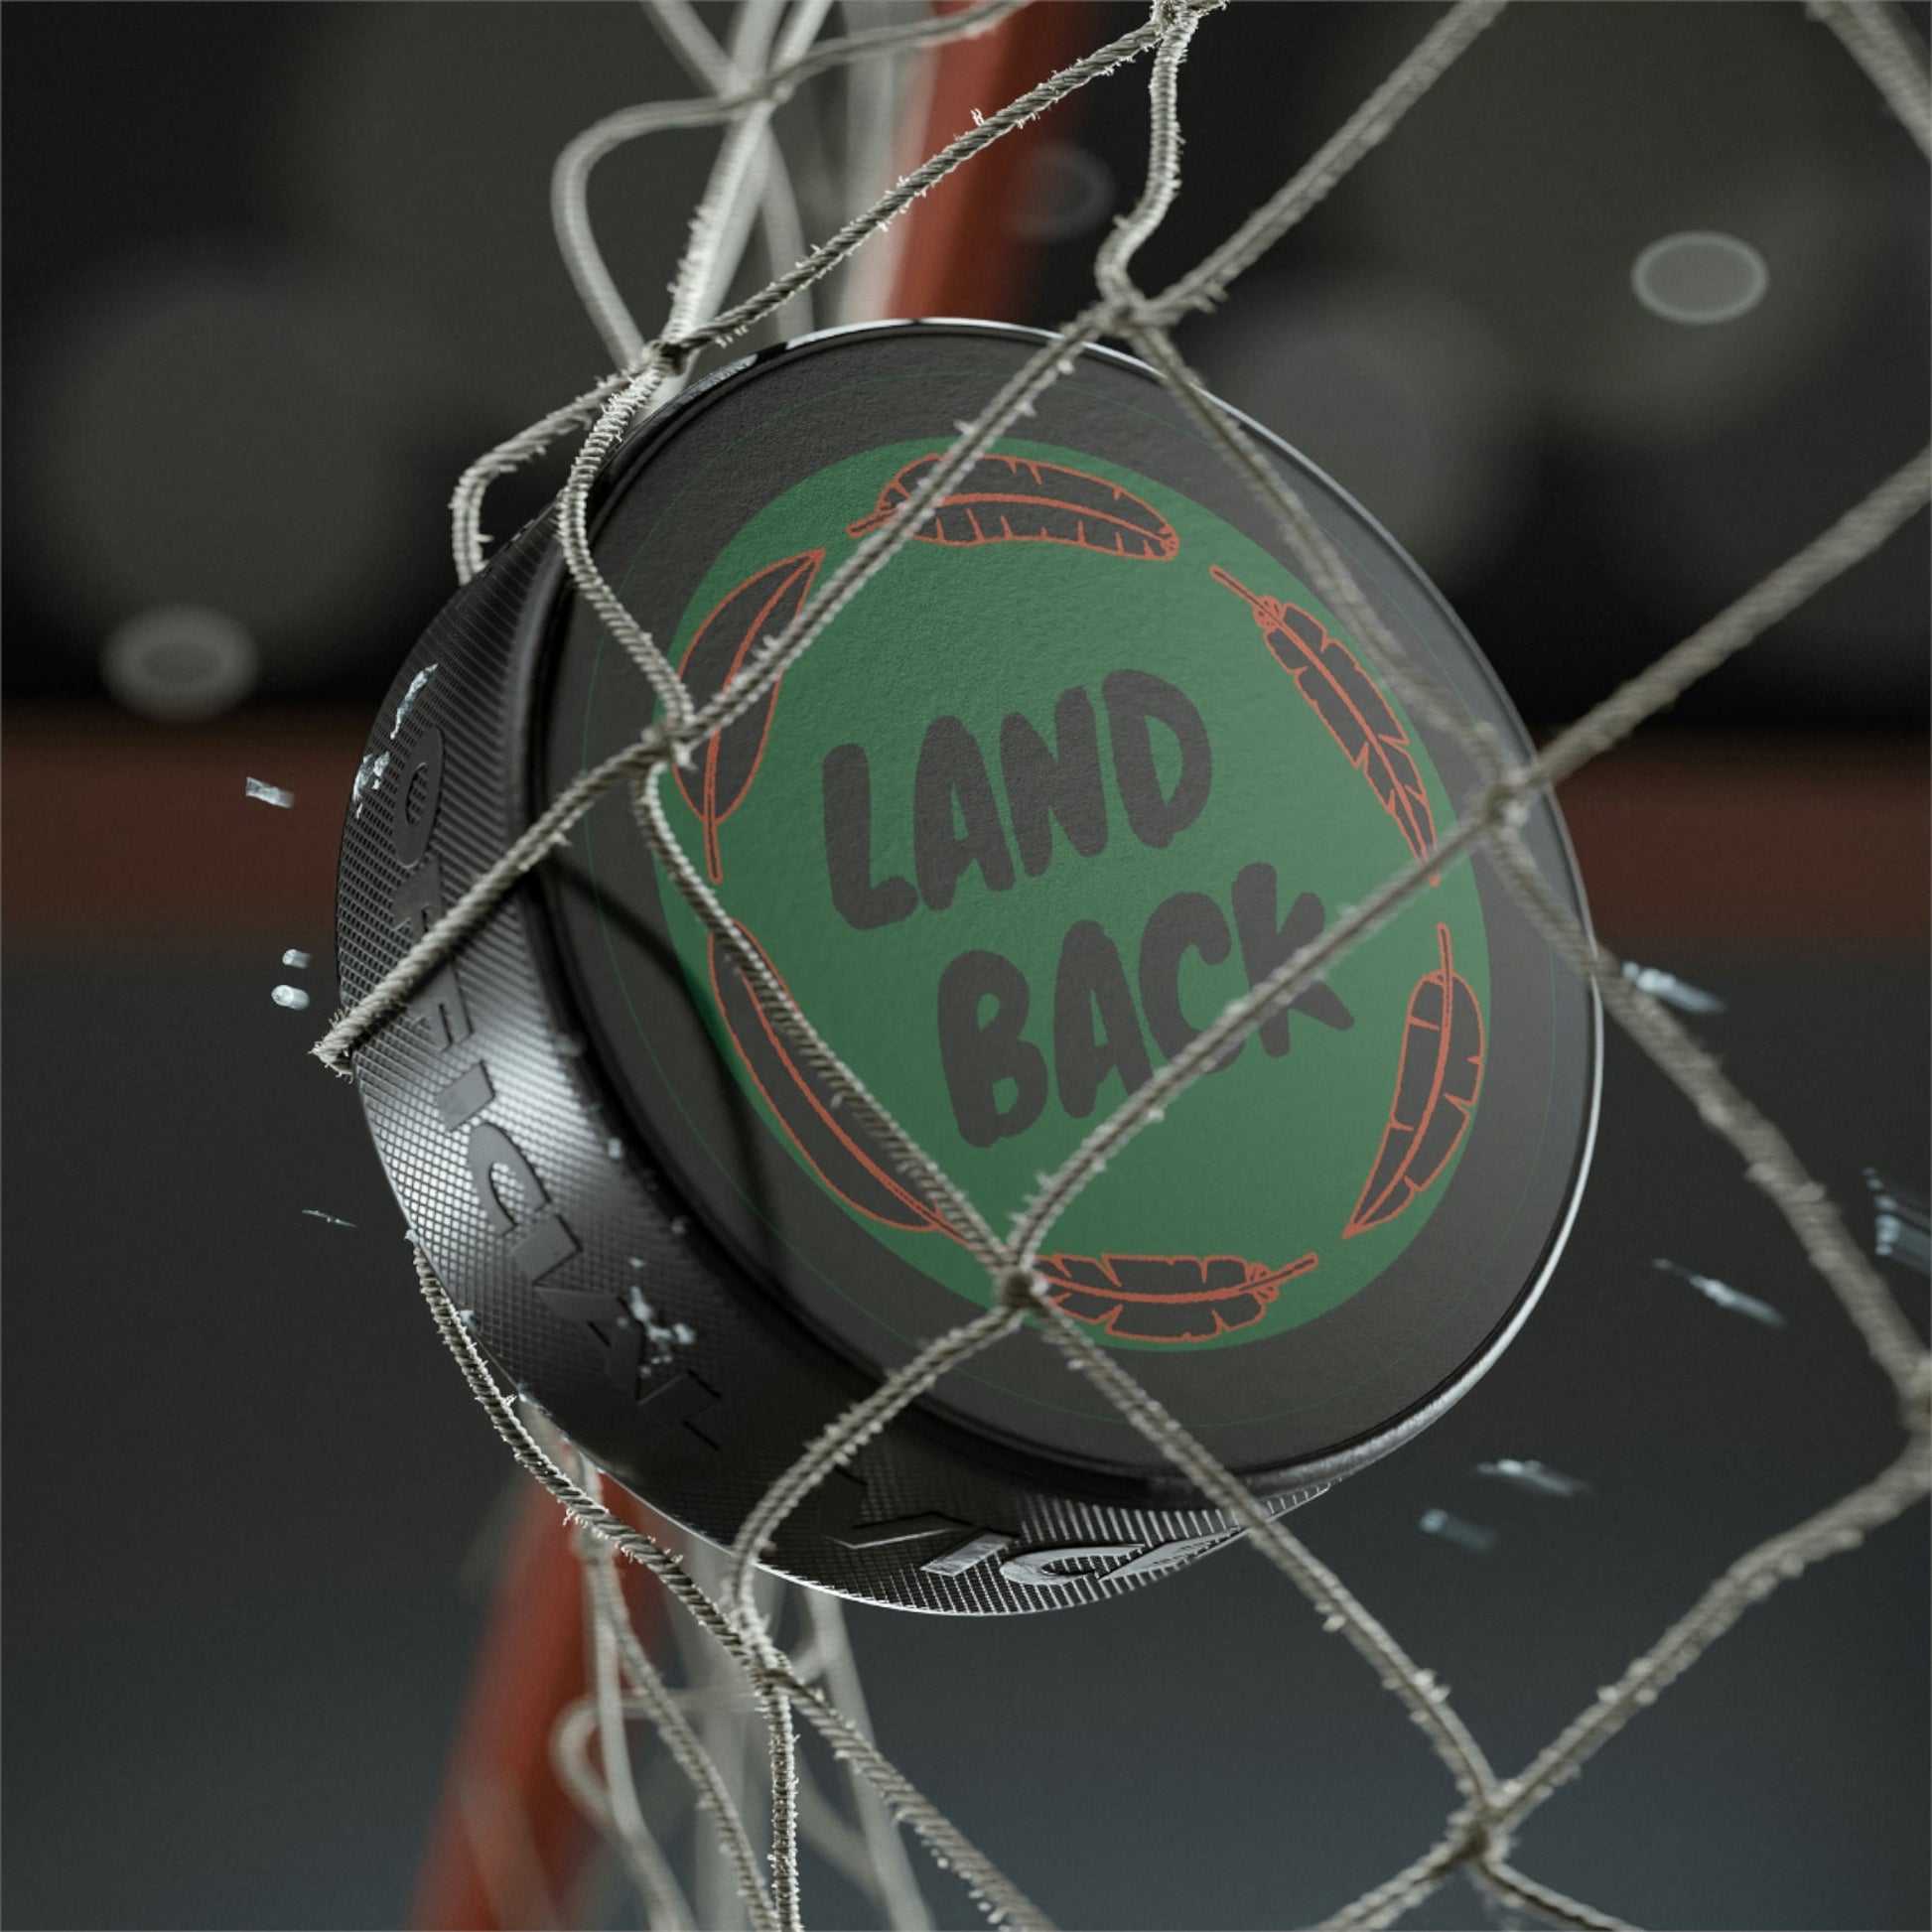 Land Back Hockey Puck - Nikikw Designs